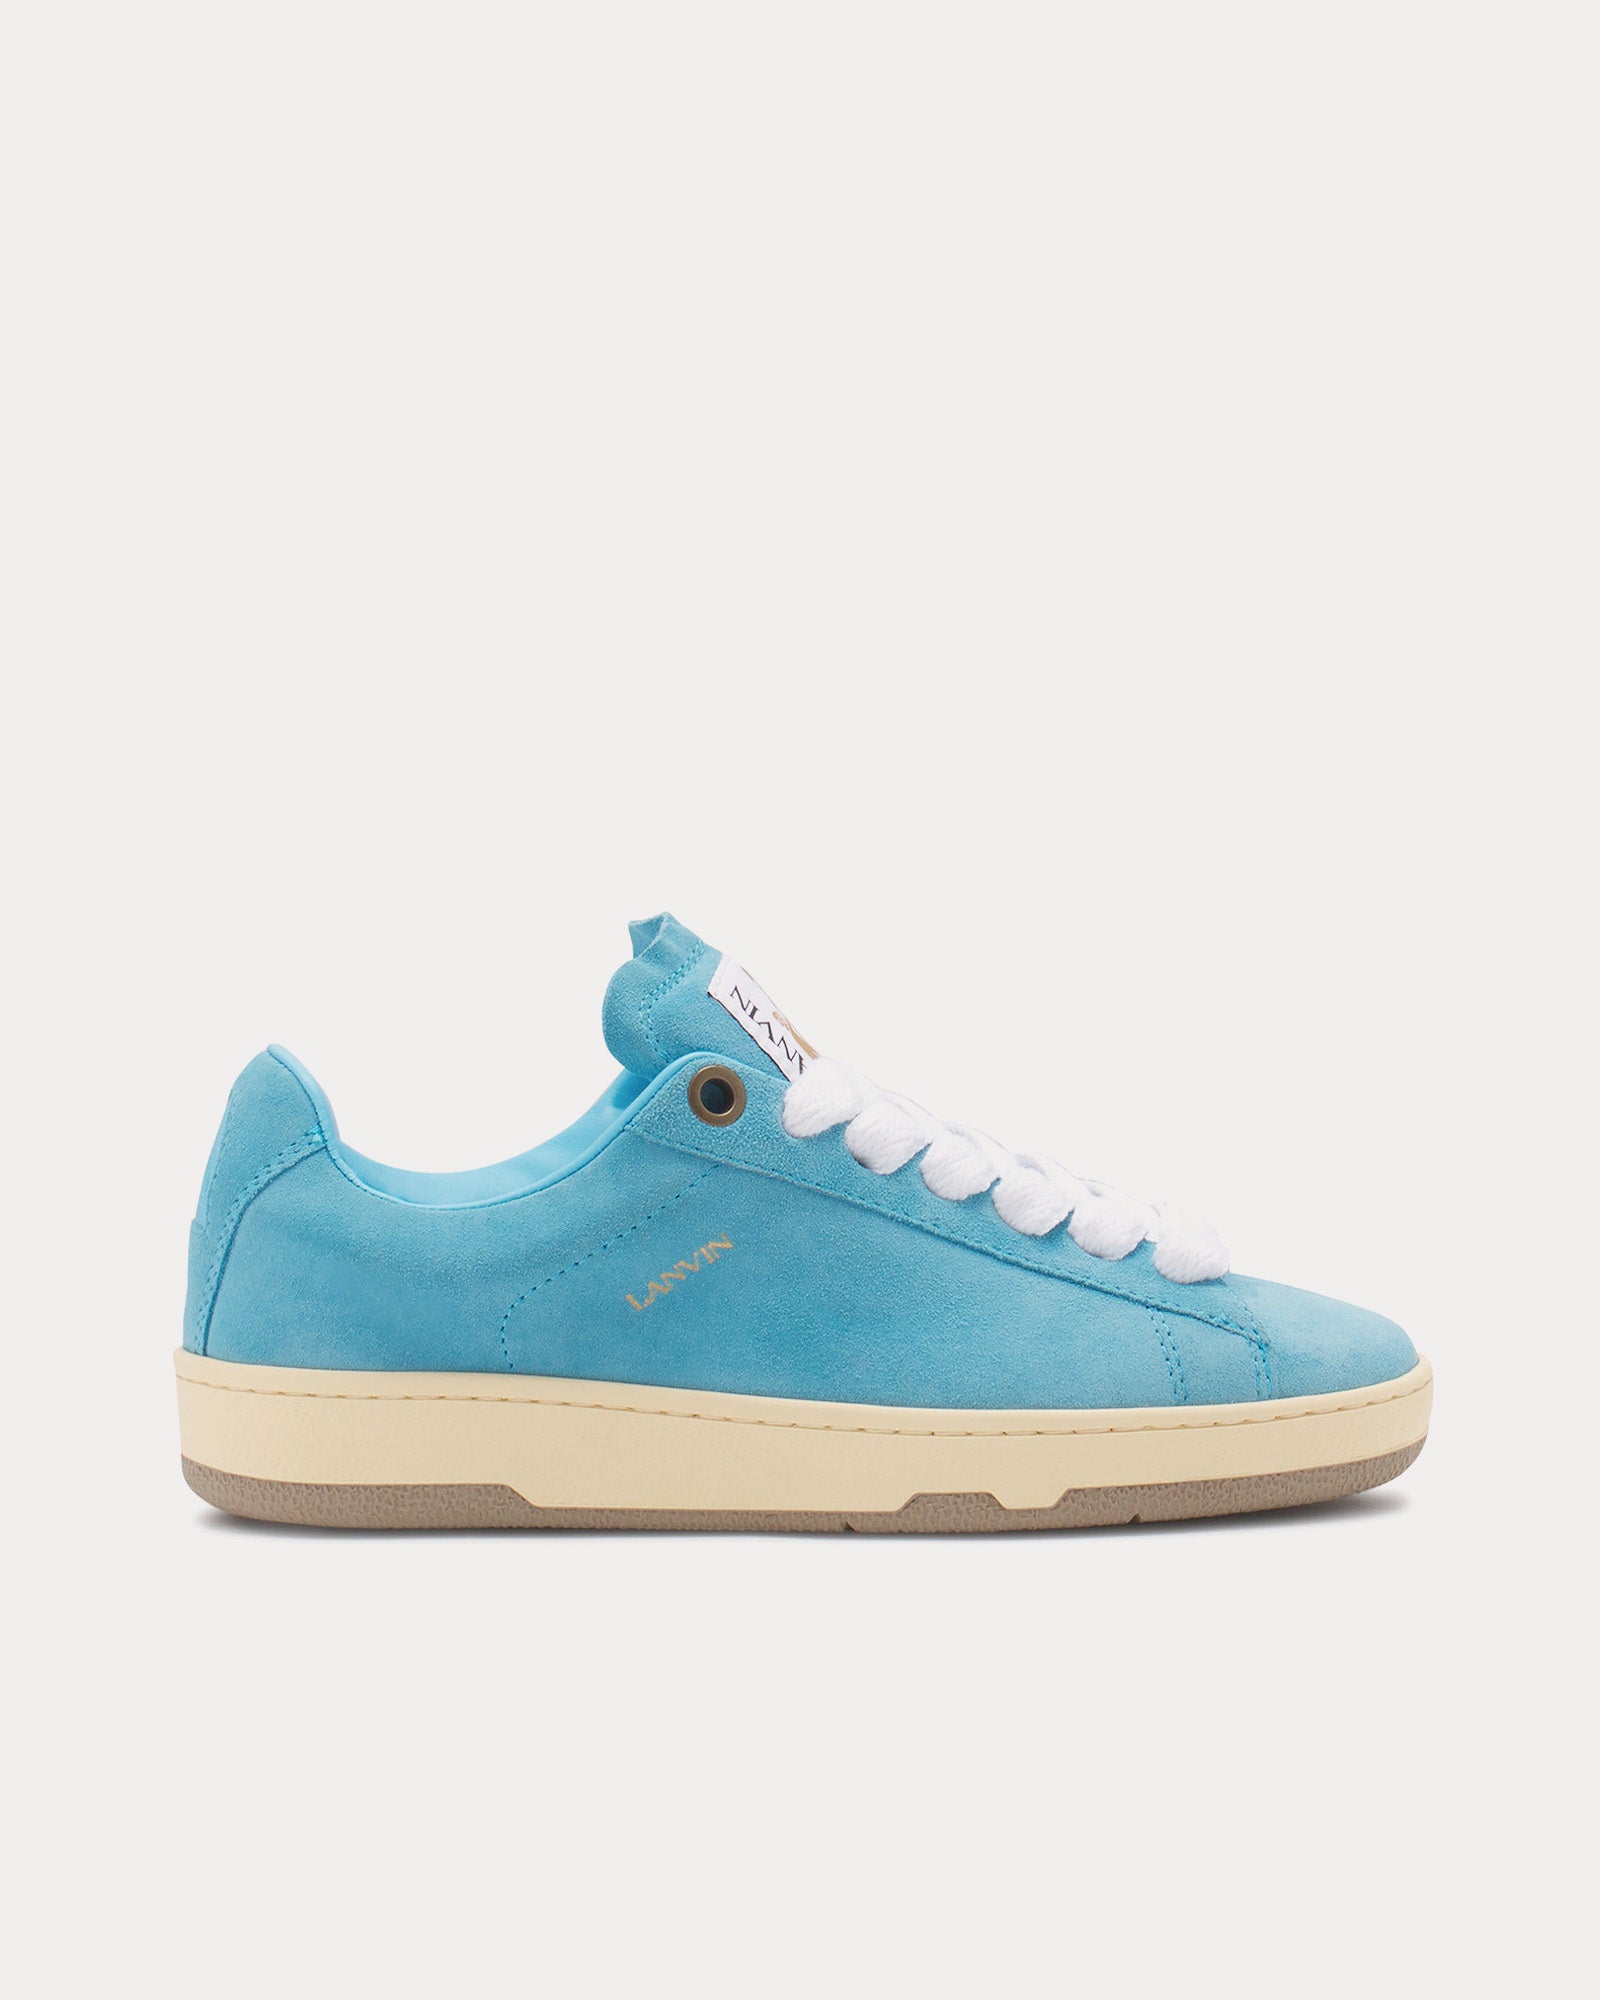 Lanvin - Lite Curb Suede Budgie Blue Low Top Sneakers